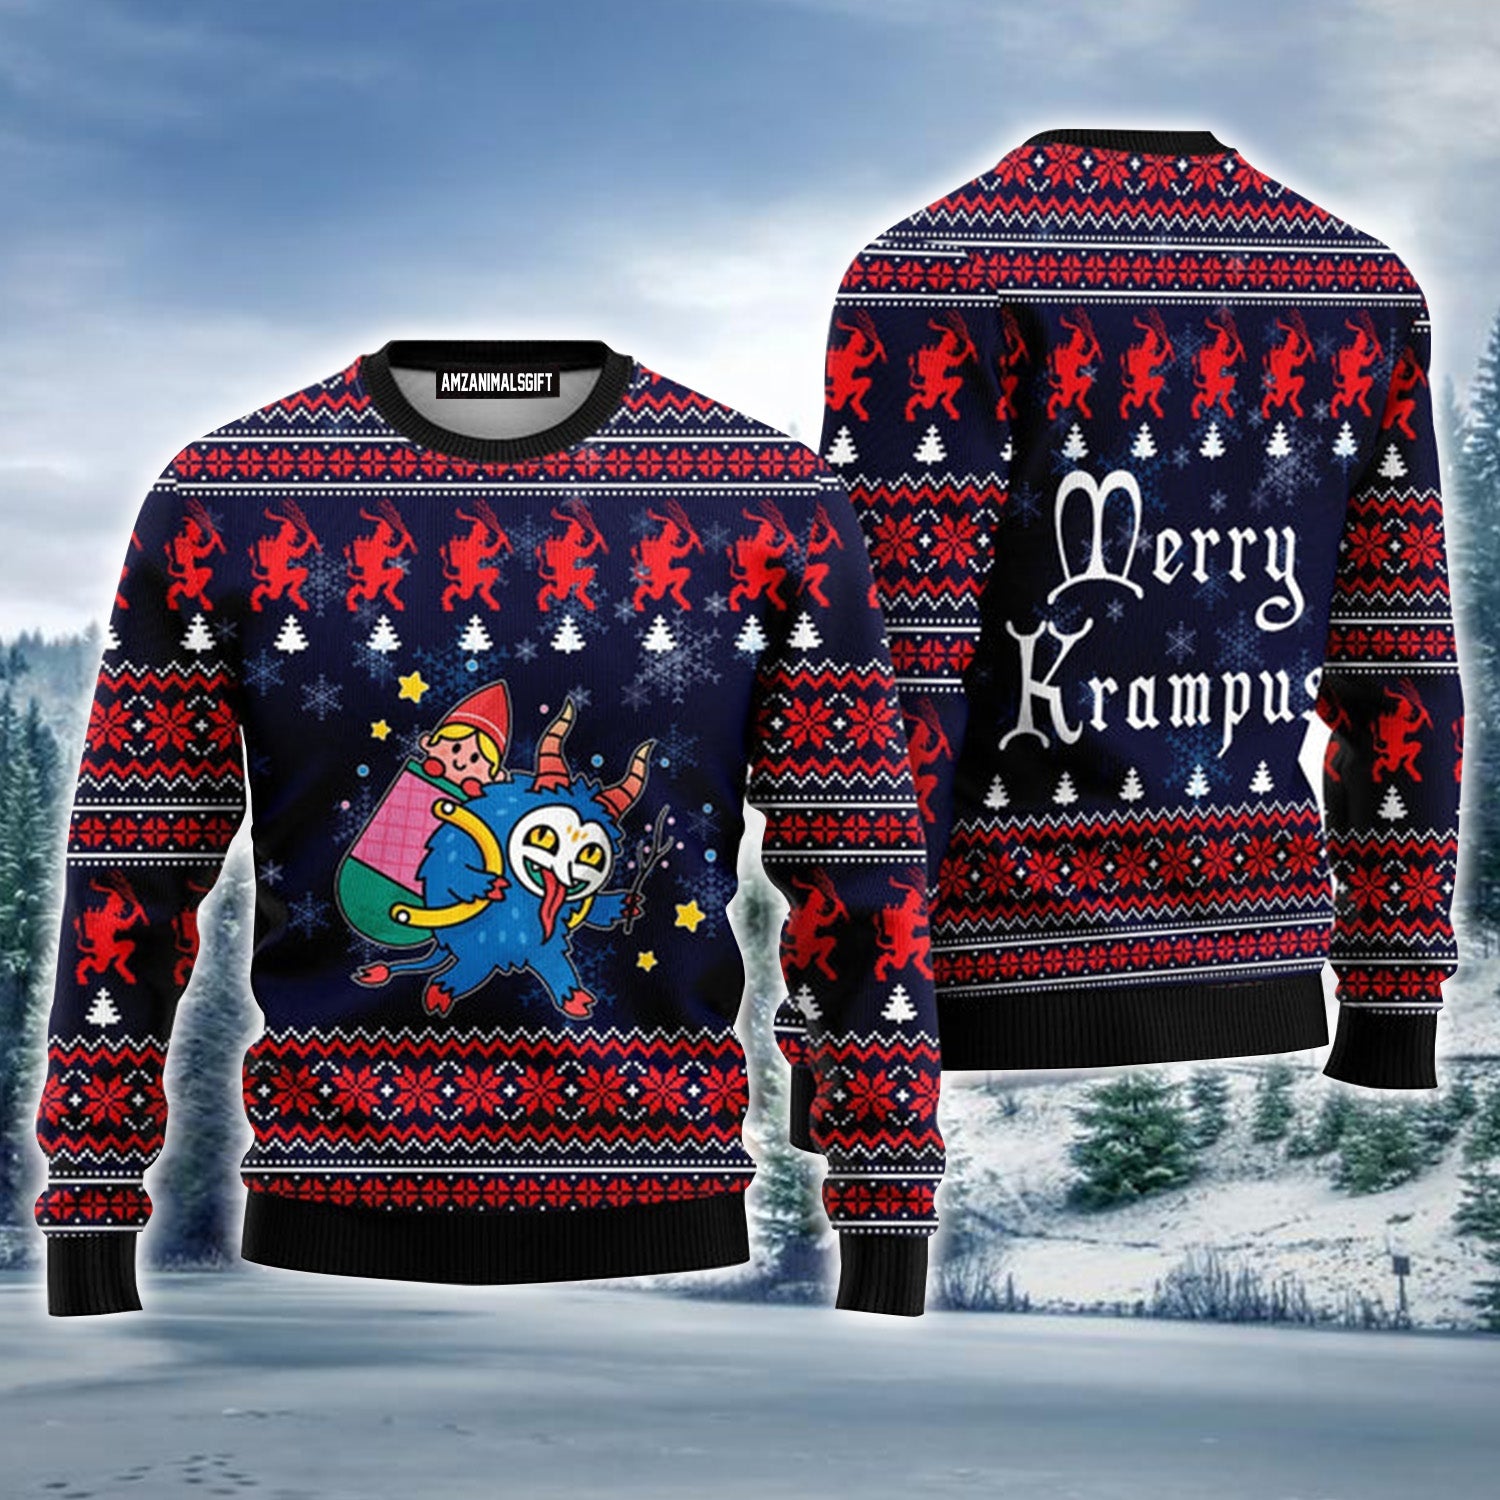 Merry Krampus Urly Christmas Sweater, Christmas Sweater For Men & Women - Perfect Gift For Christmas, New Year, Winter Holiday